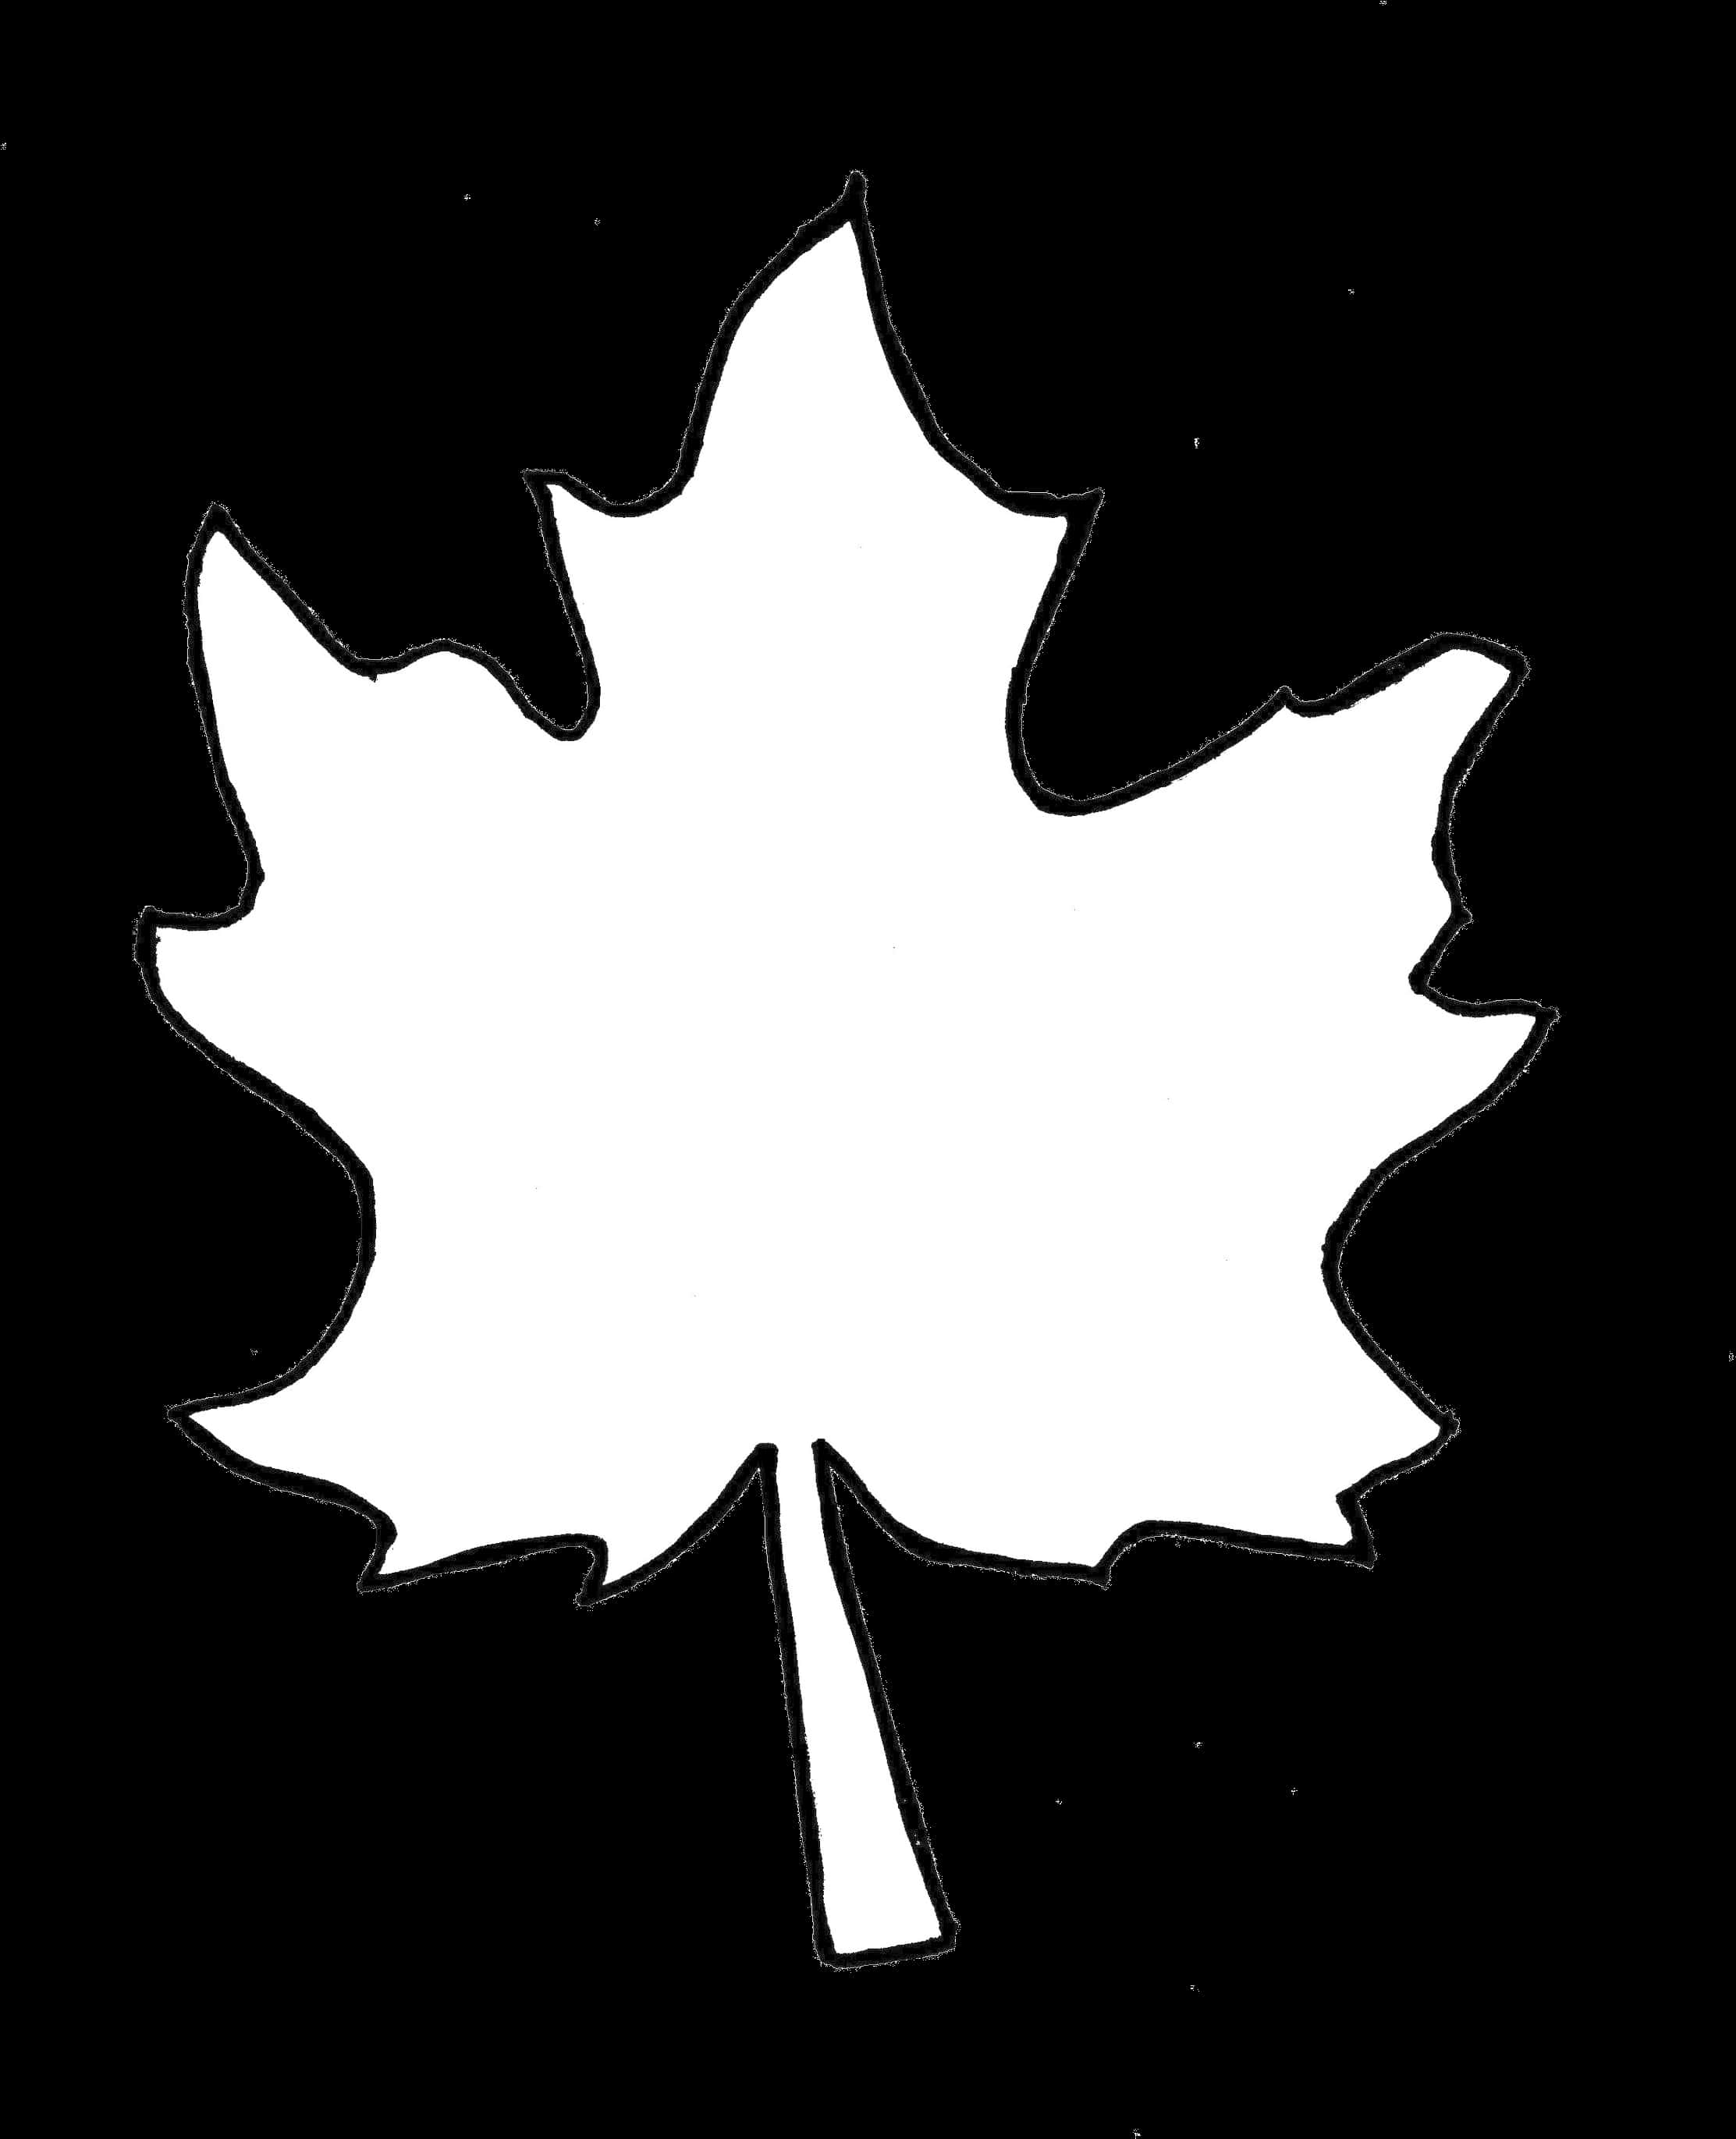 A White Leaf On A Black Background